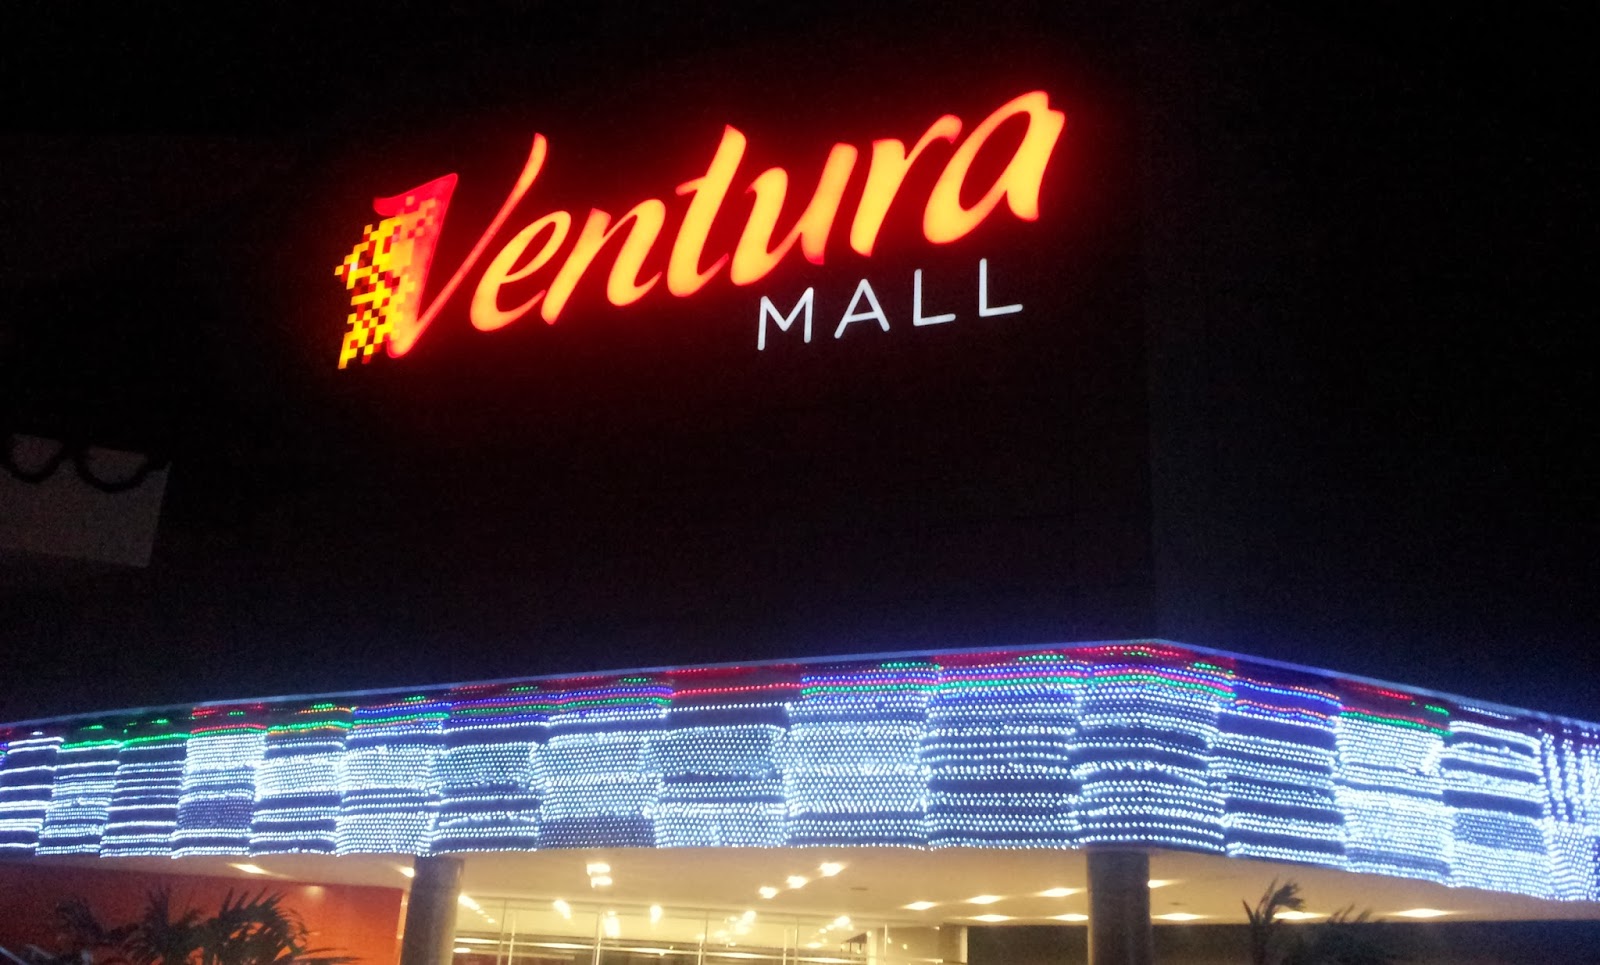 Ventura Mall